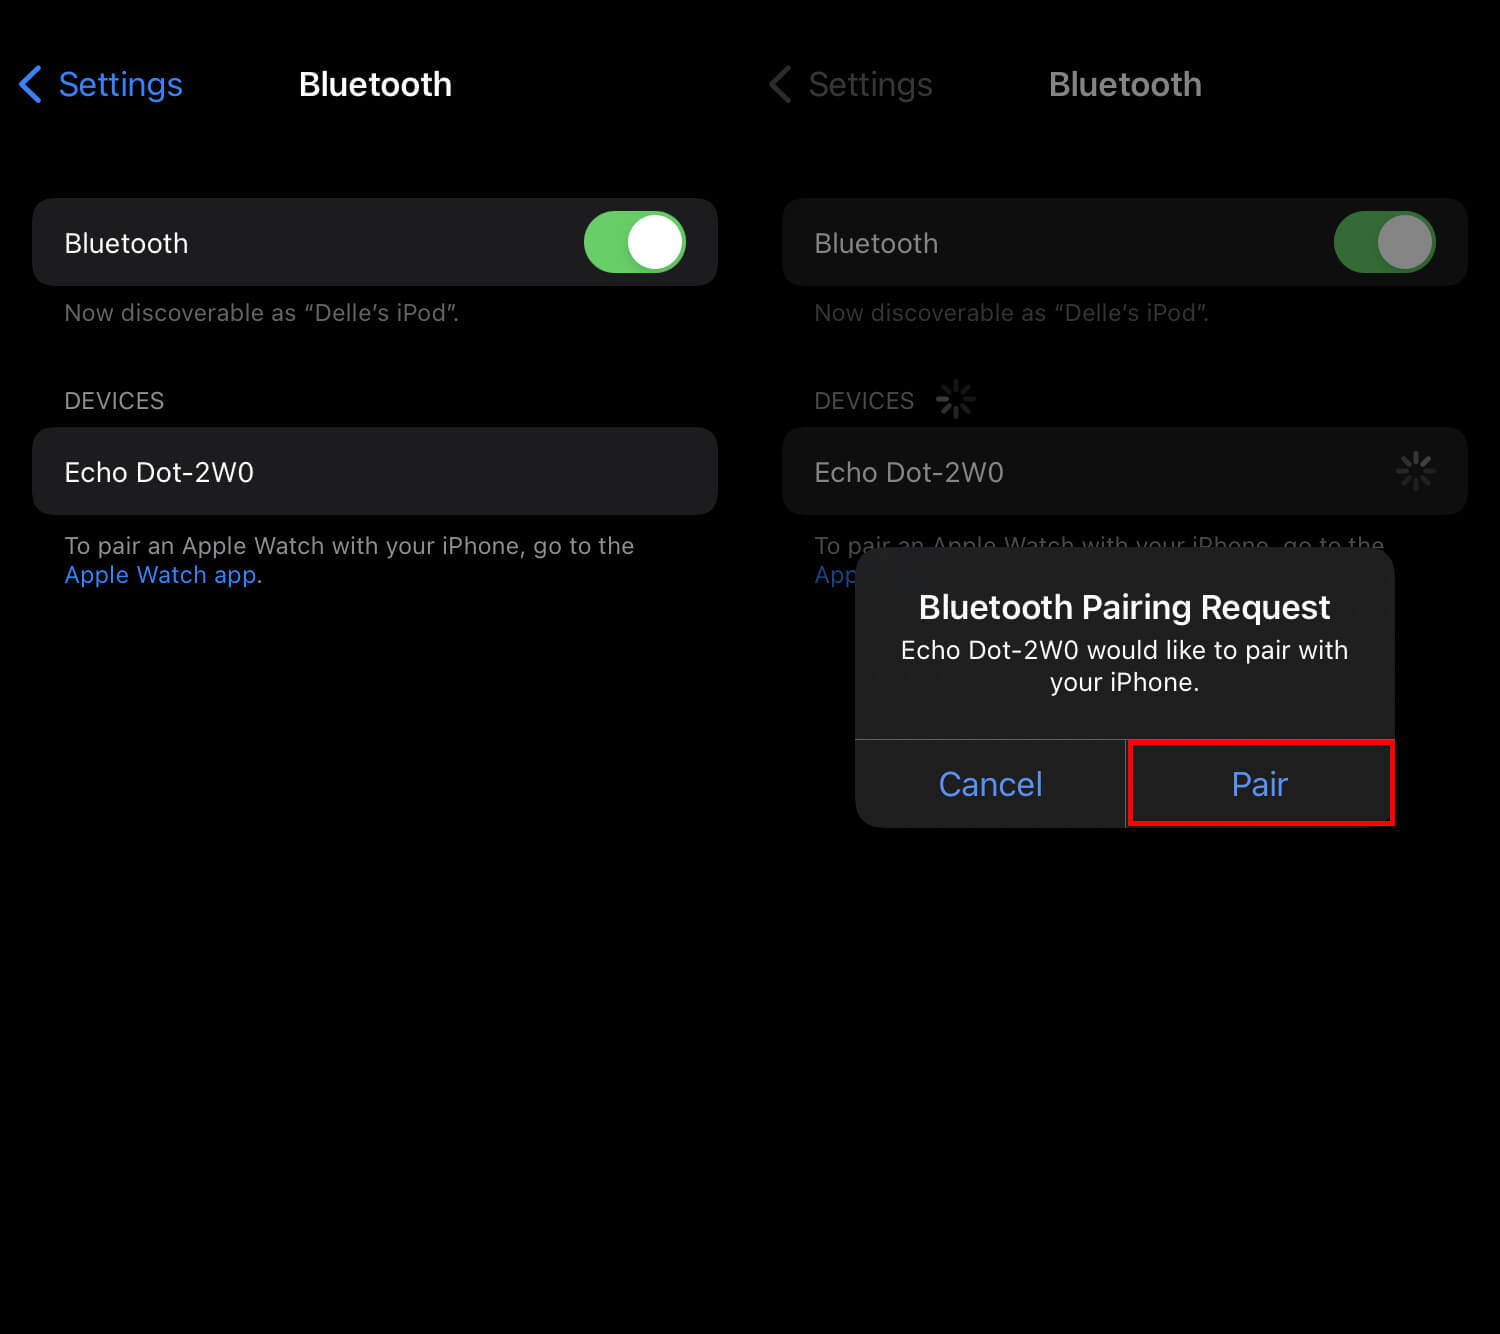 Play iTunes On Alexa Via Bluetooth